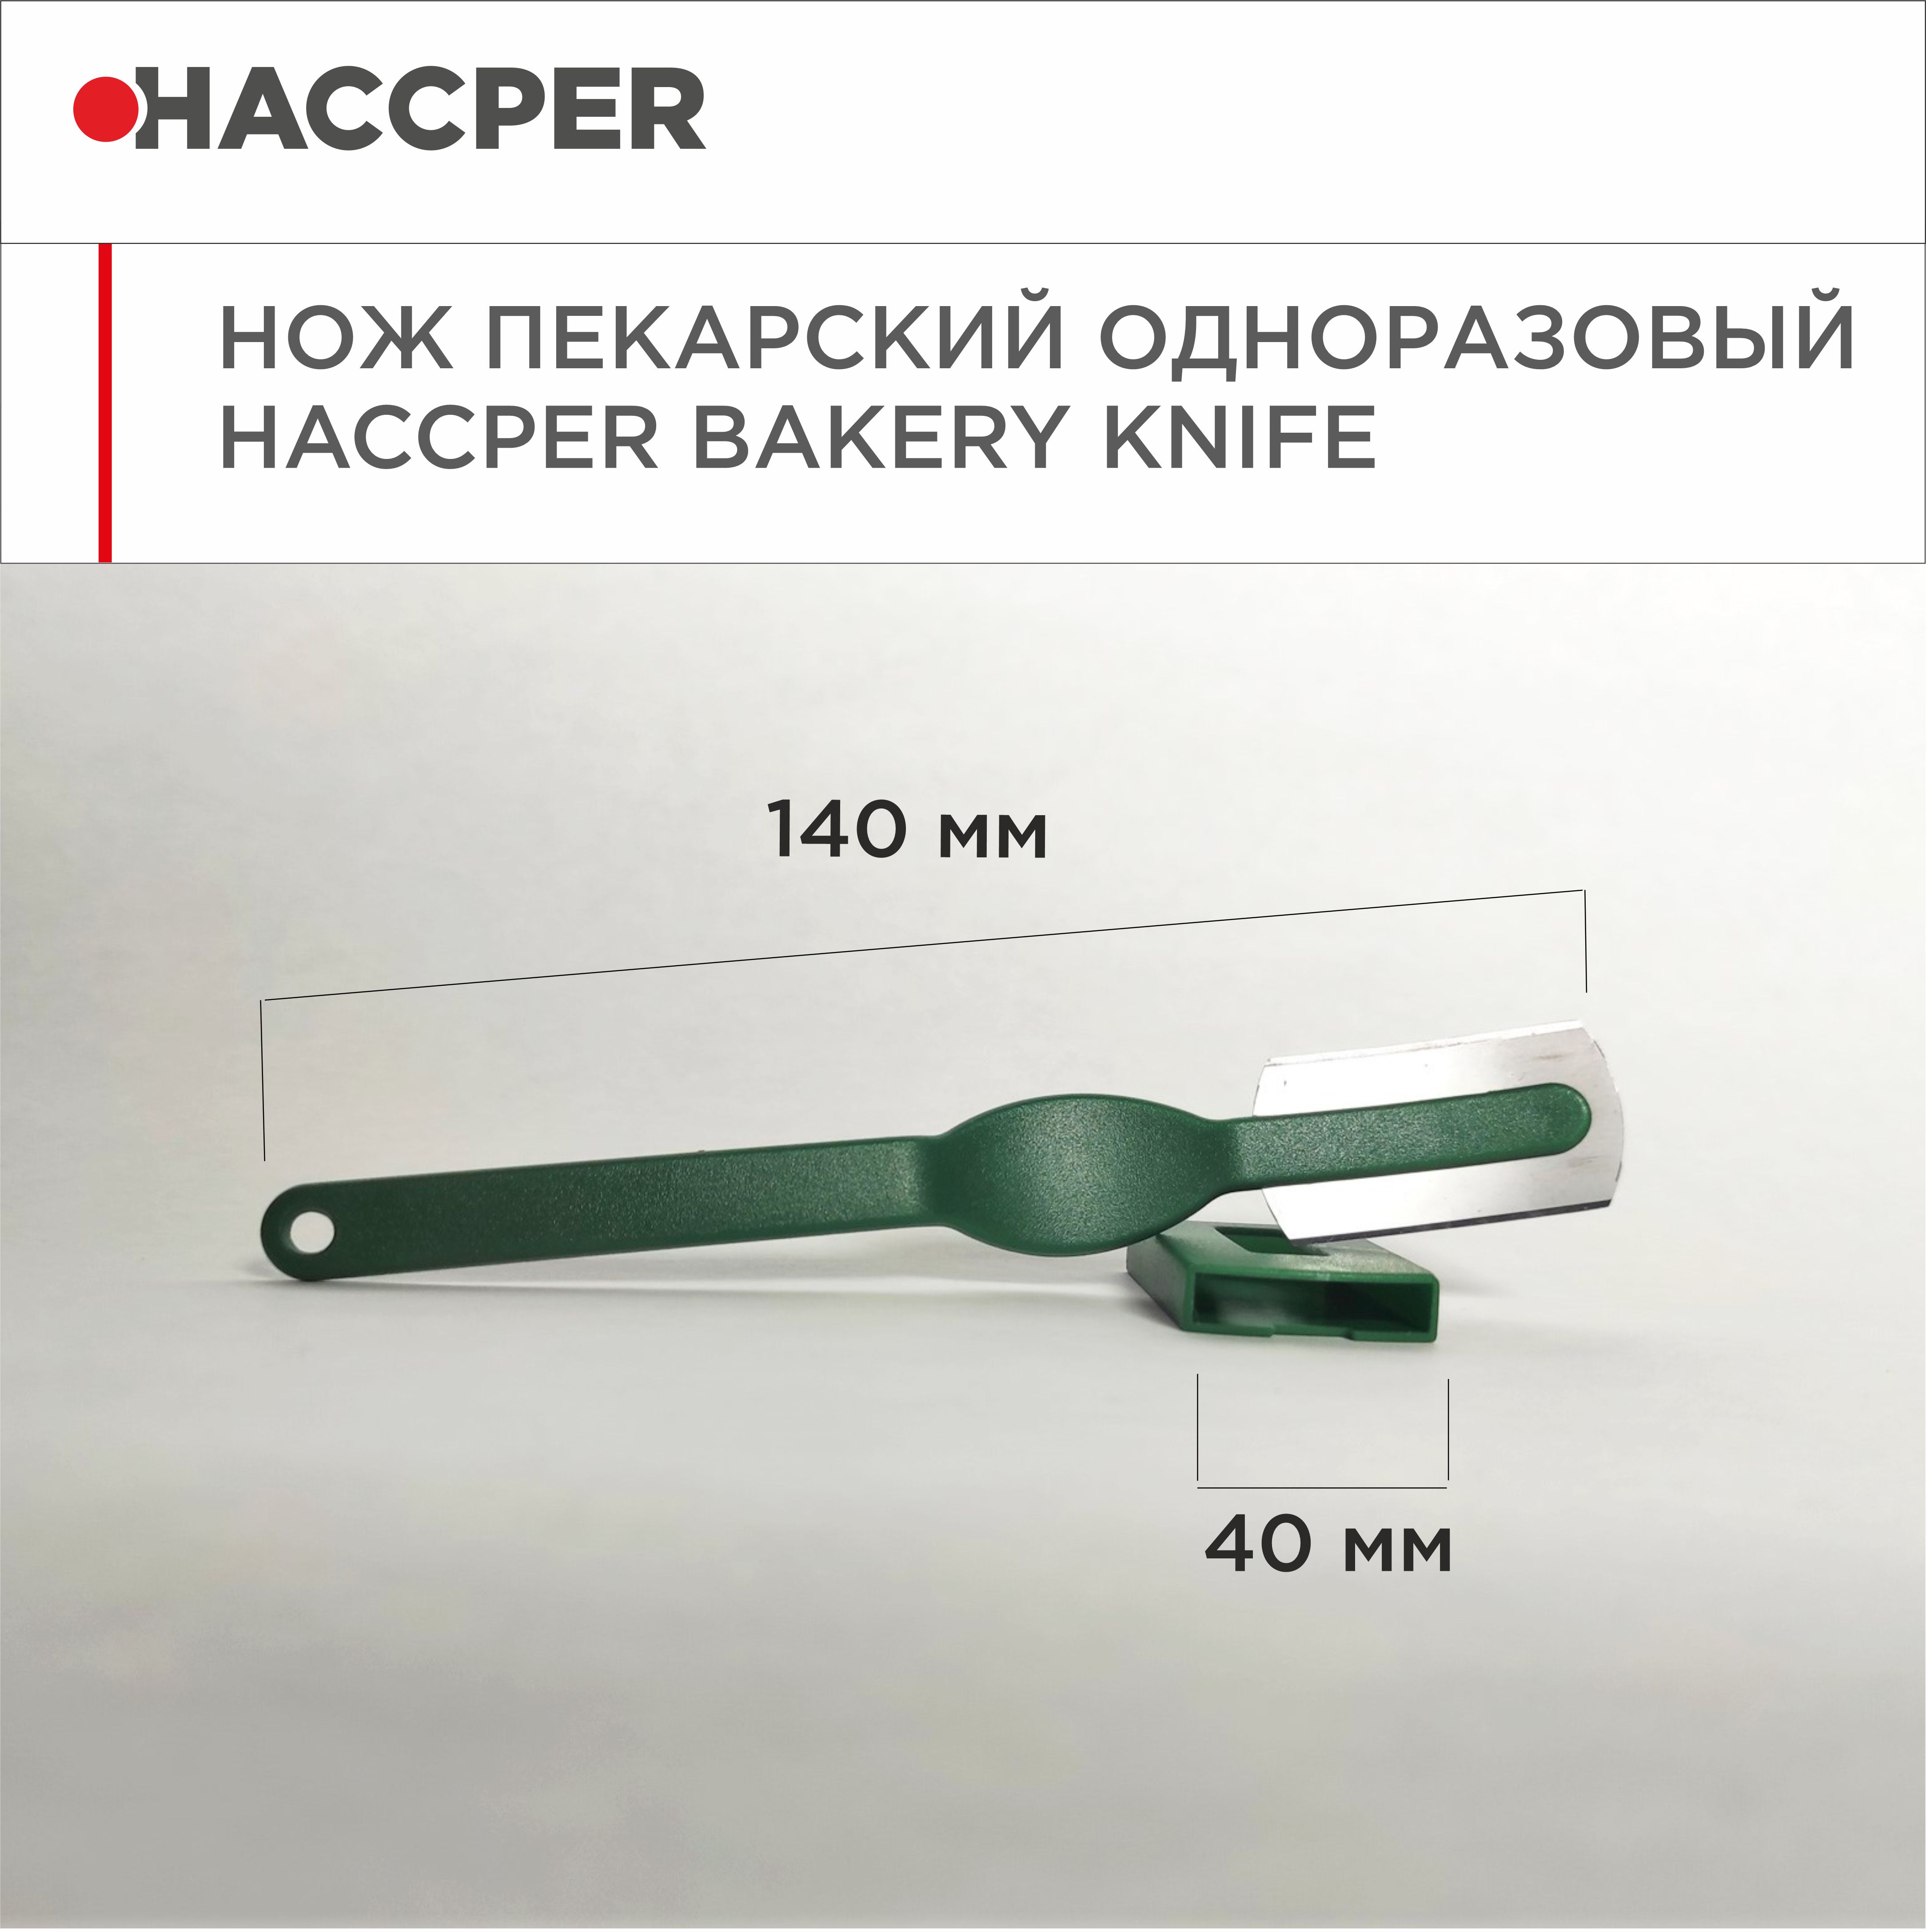 Нож пекарский одноразовый HACCPER Bakery Knife